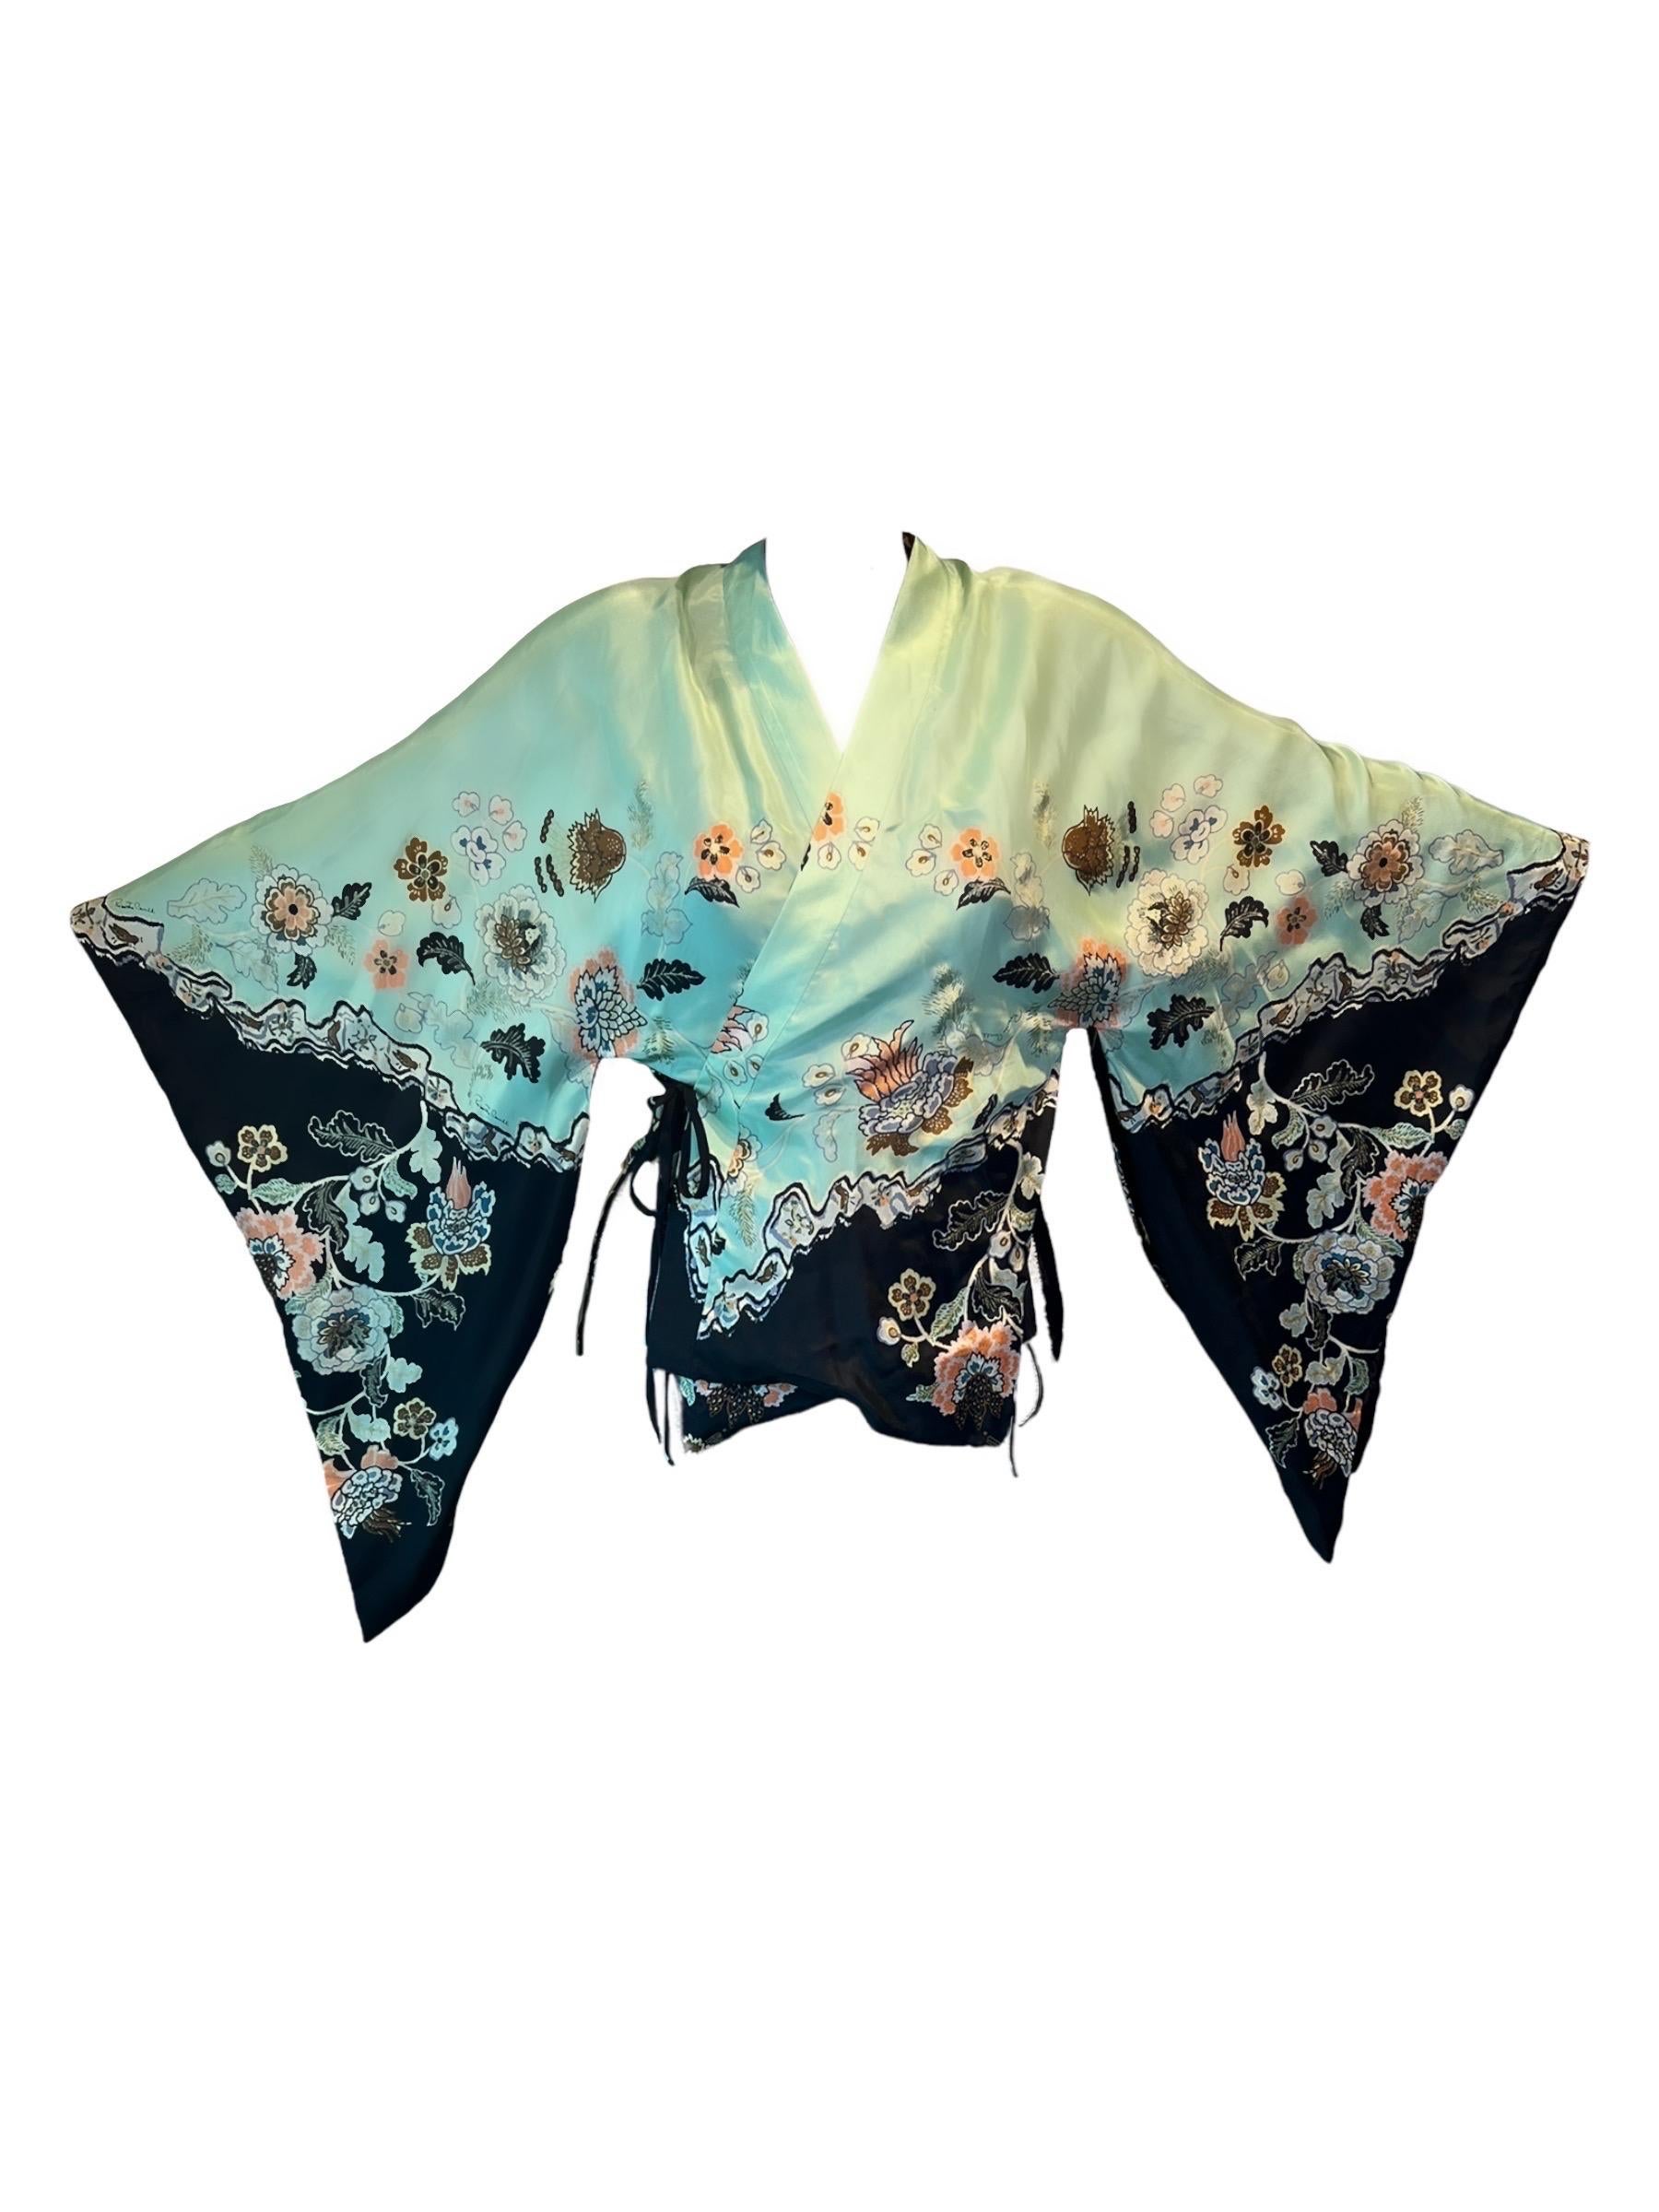 Gray Roberto Cavalli S/S 2003 Runway Chinoiserie Print Silk Kimono Top For Sale